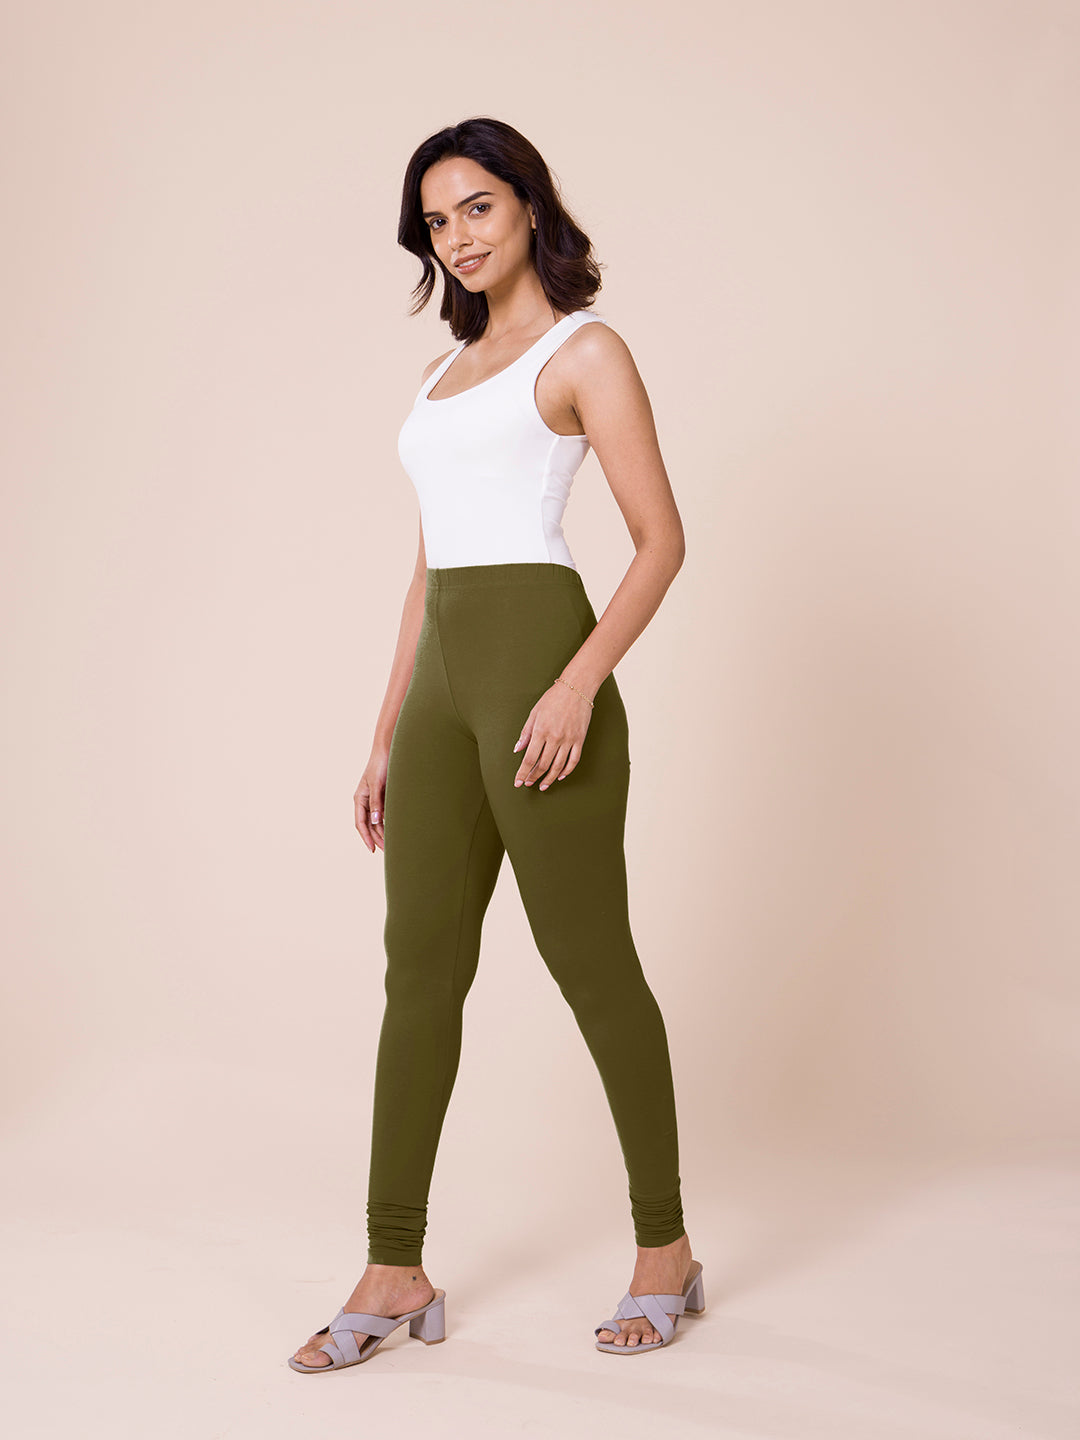 Buy TAG 7 Olive Green Cotton Leggings for Women Online @ Tata CLiQ